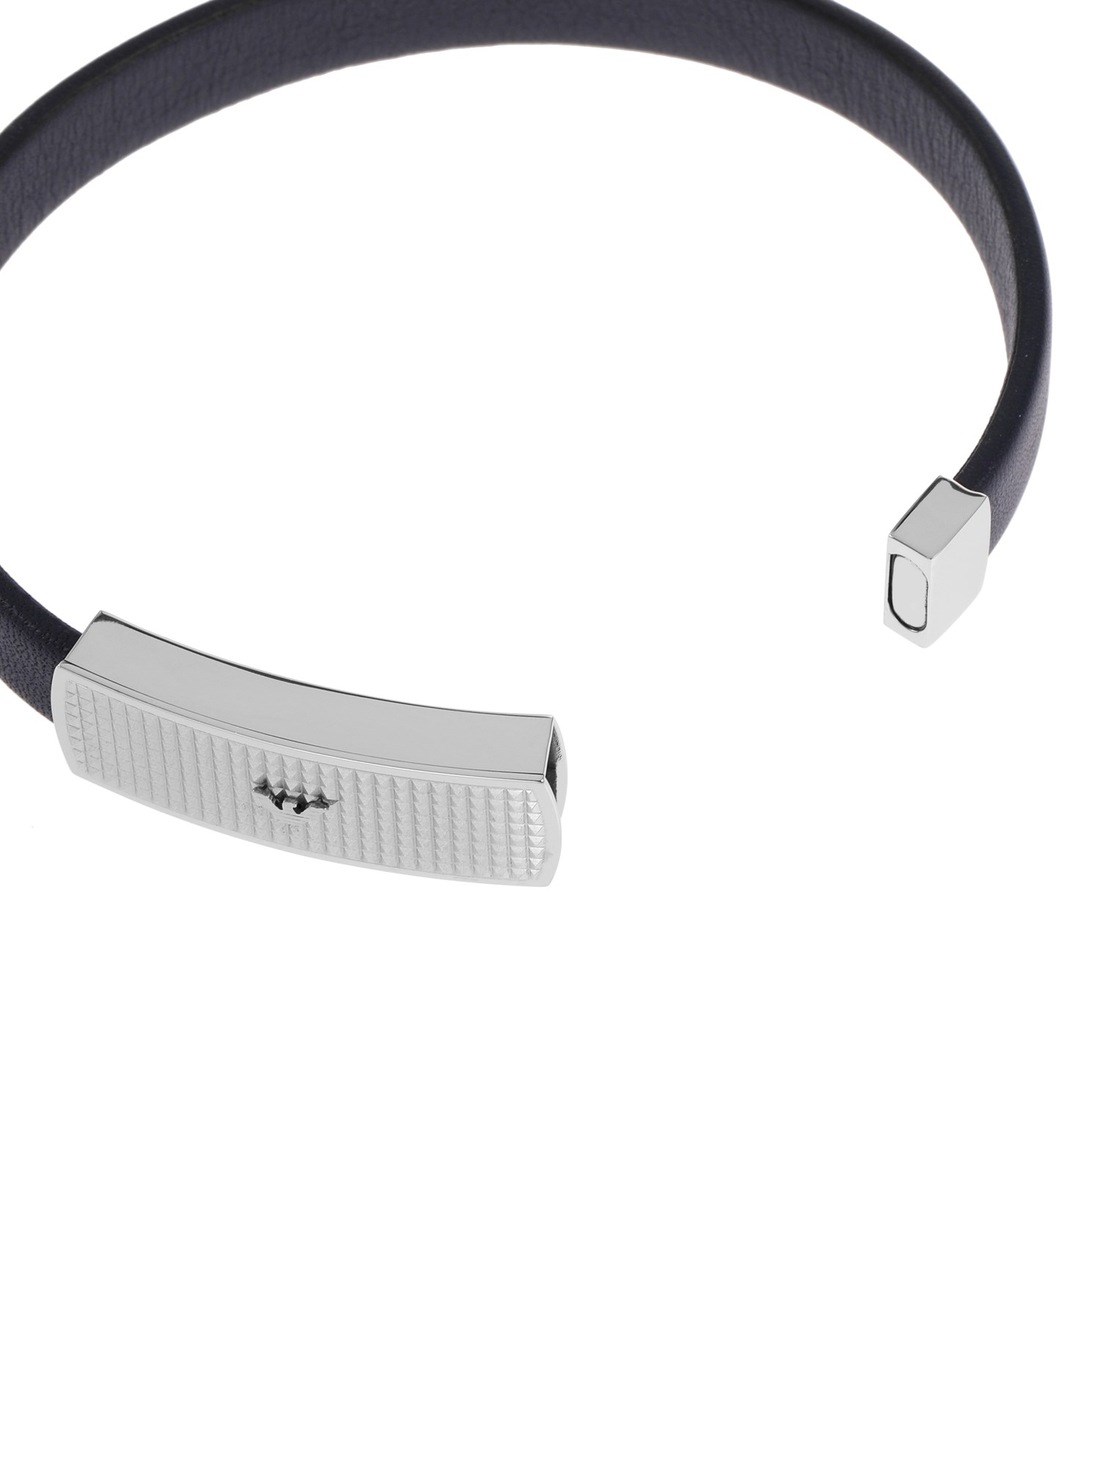 Buy Emporio Armani Silver Bracelet EGS2980040 at Amazon.in